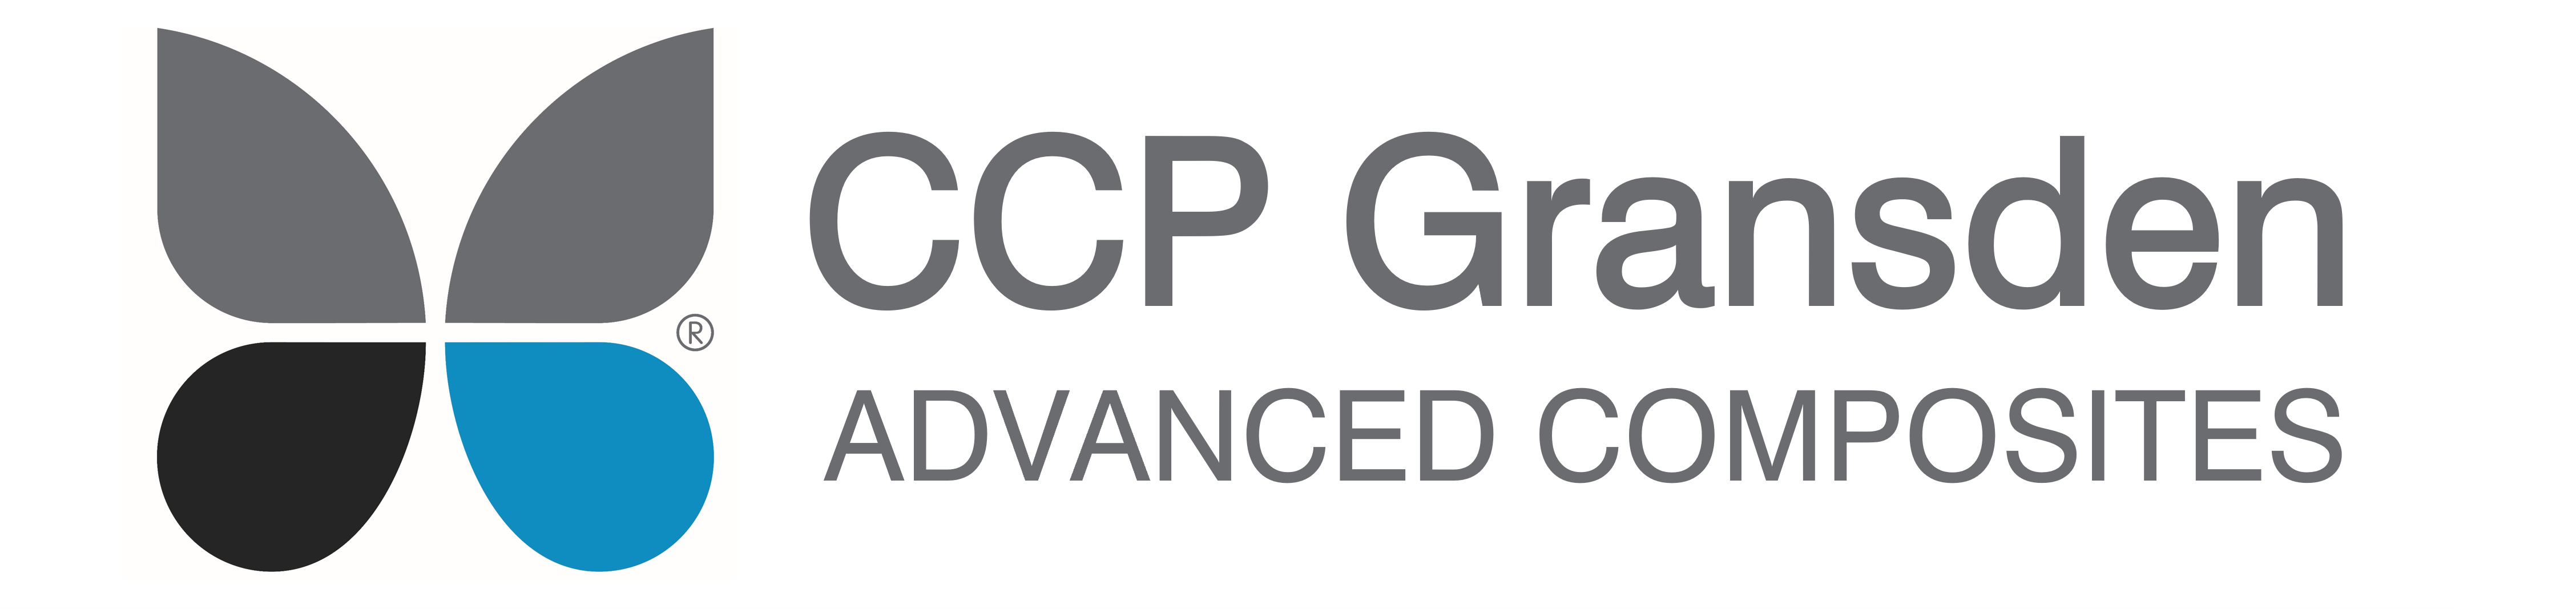 CCP GRANSDEN | ADVANCED COMPOSITES